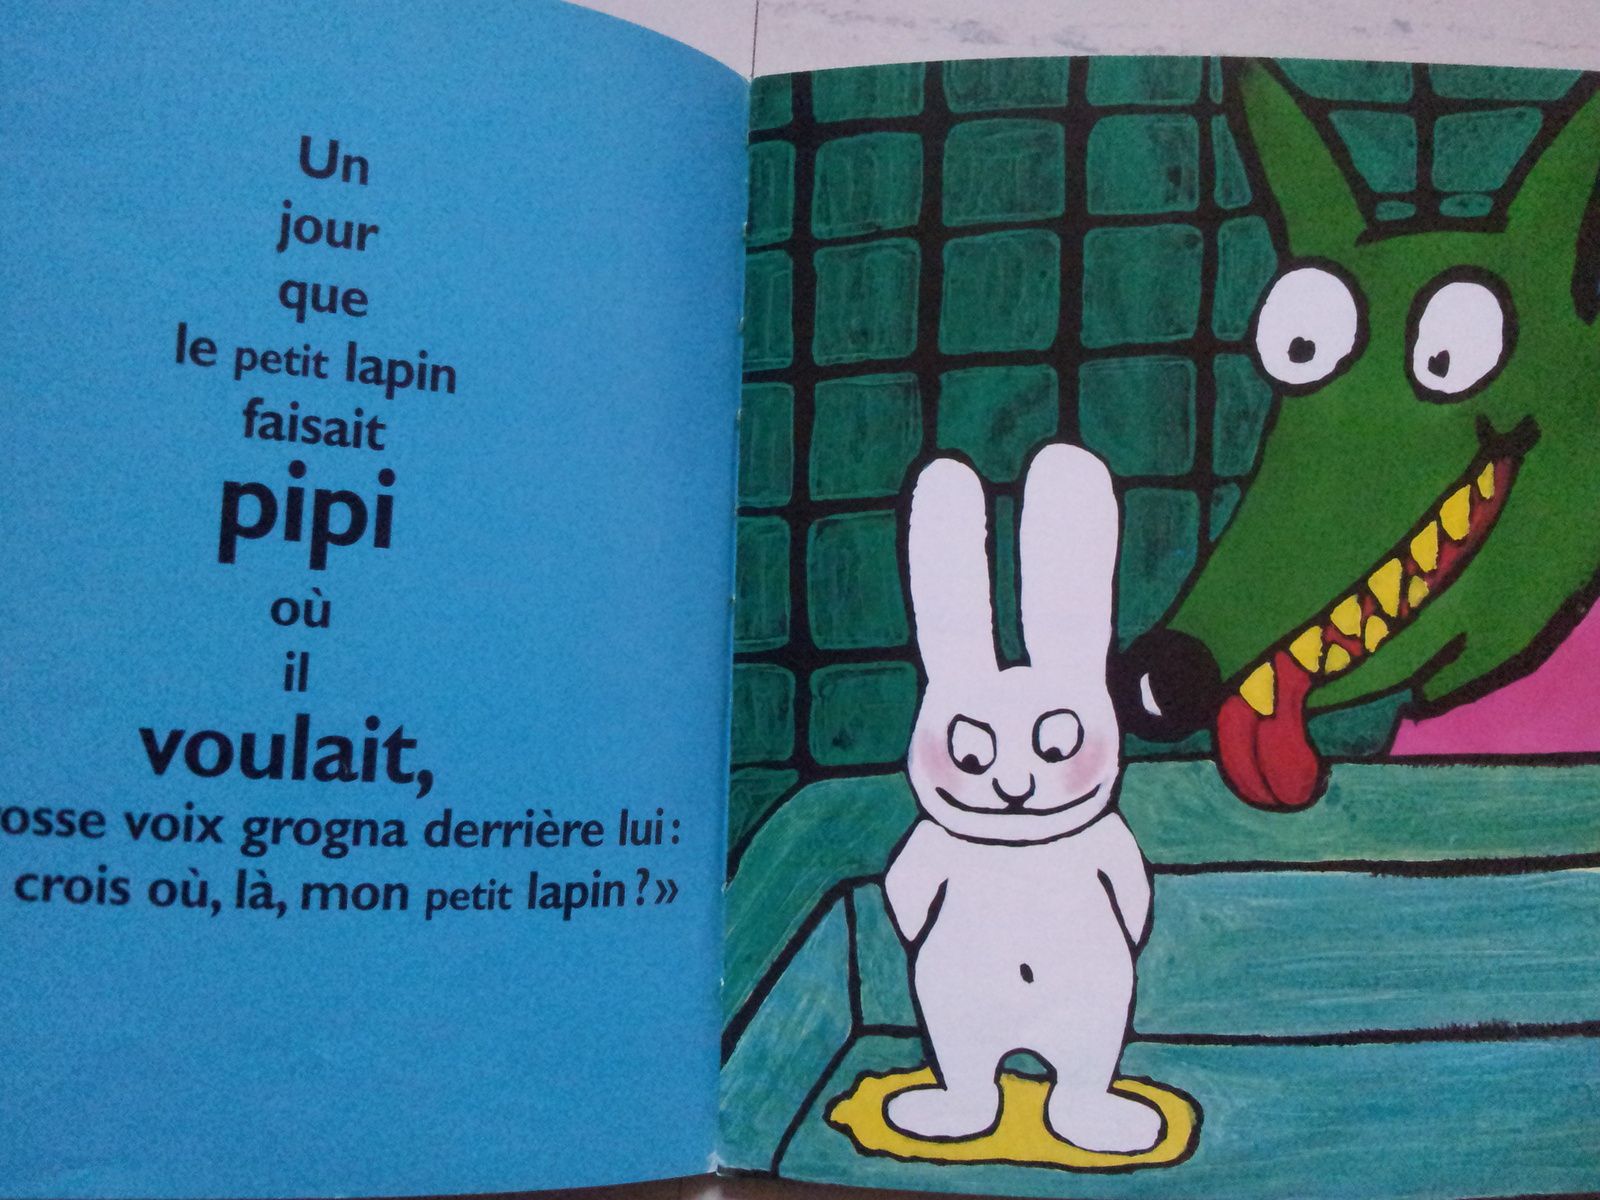 Simon - Vol. 1 : Ce petit lapin qui dit Caca Boudin !.